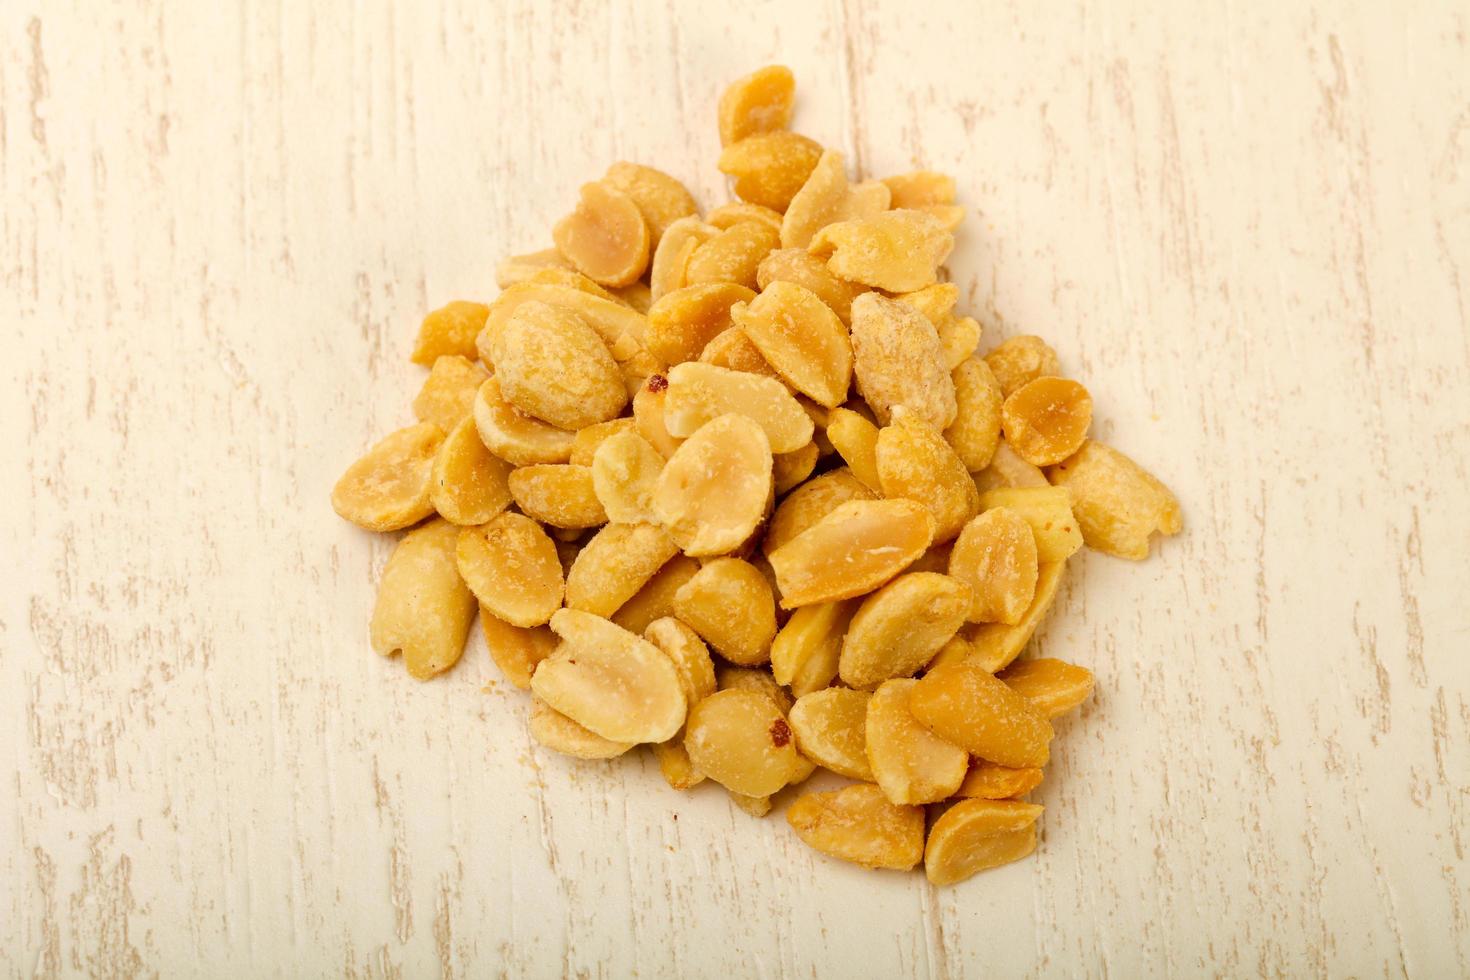 Peanut on wooden background photo